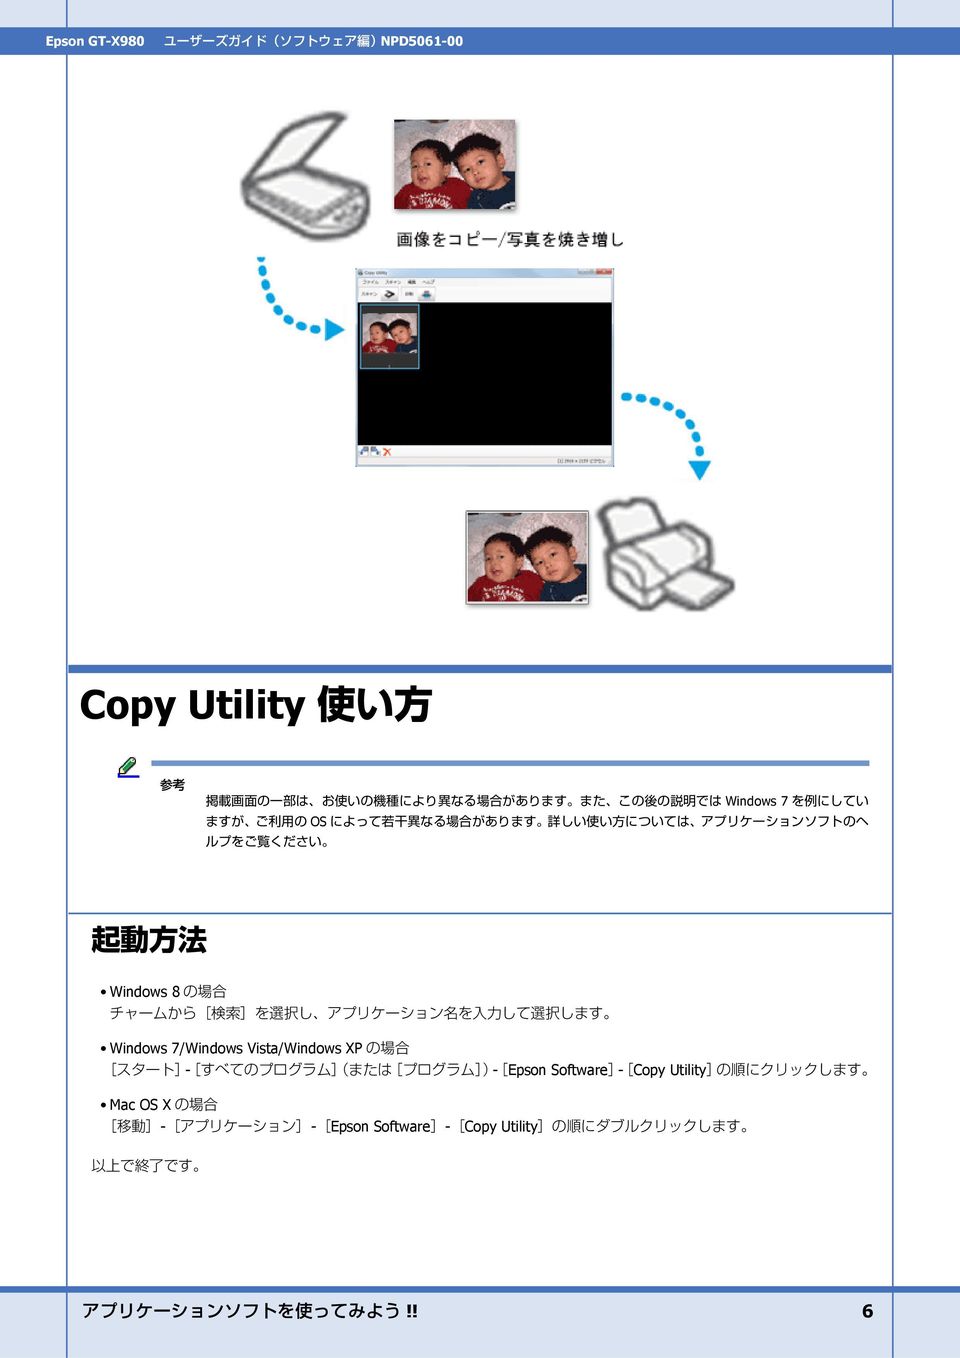 - Epson Software - Copy Utility Mac